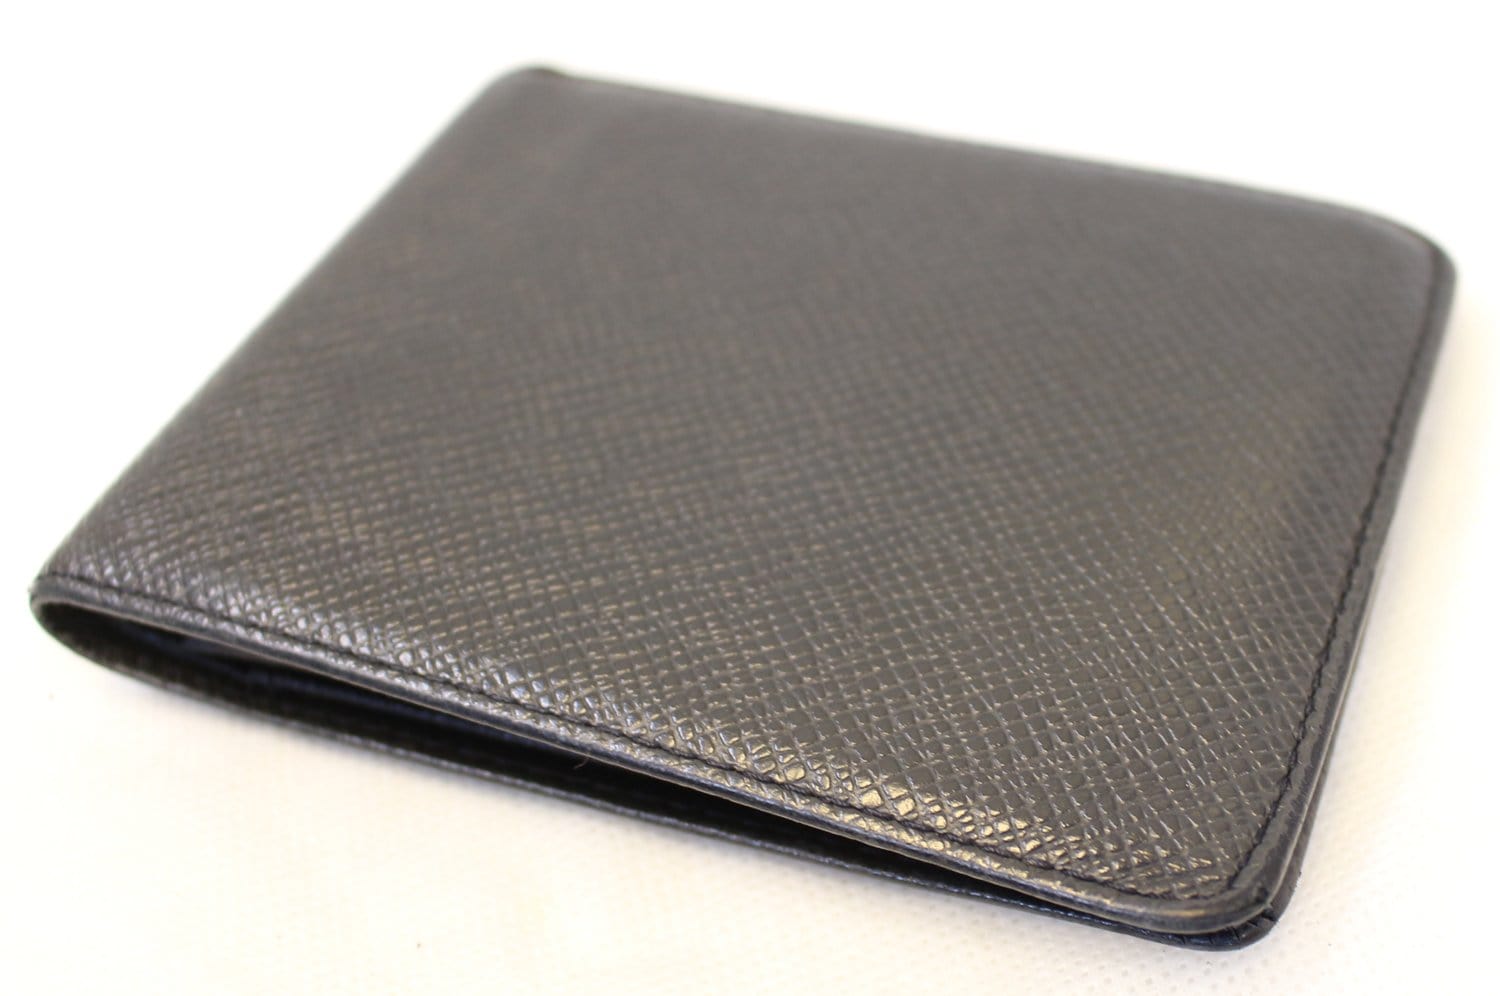 Louis Vuitton Slender Wallet Taiga Black in Taiga Leather - US